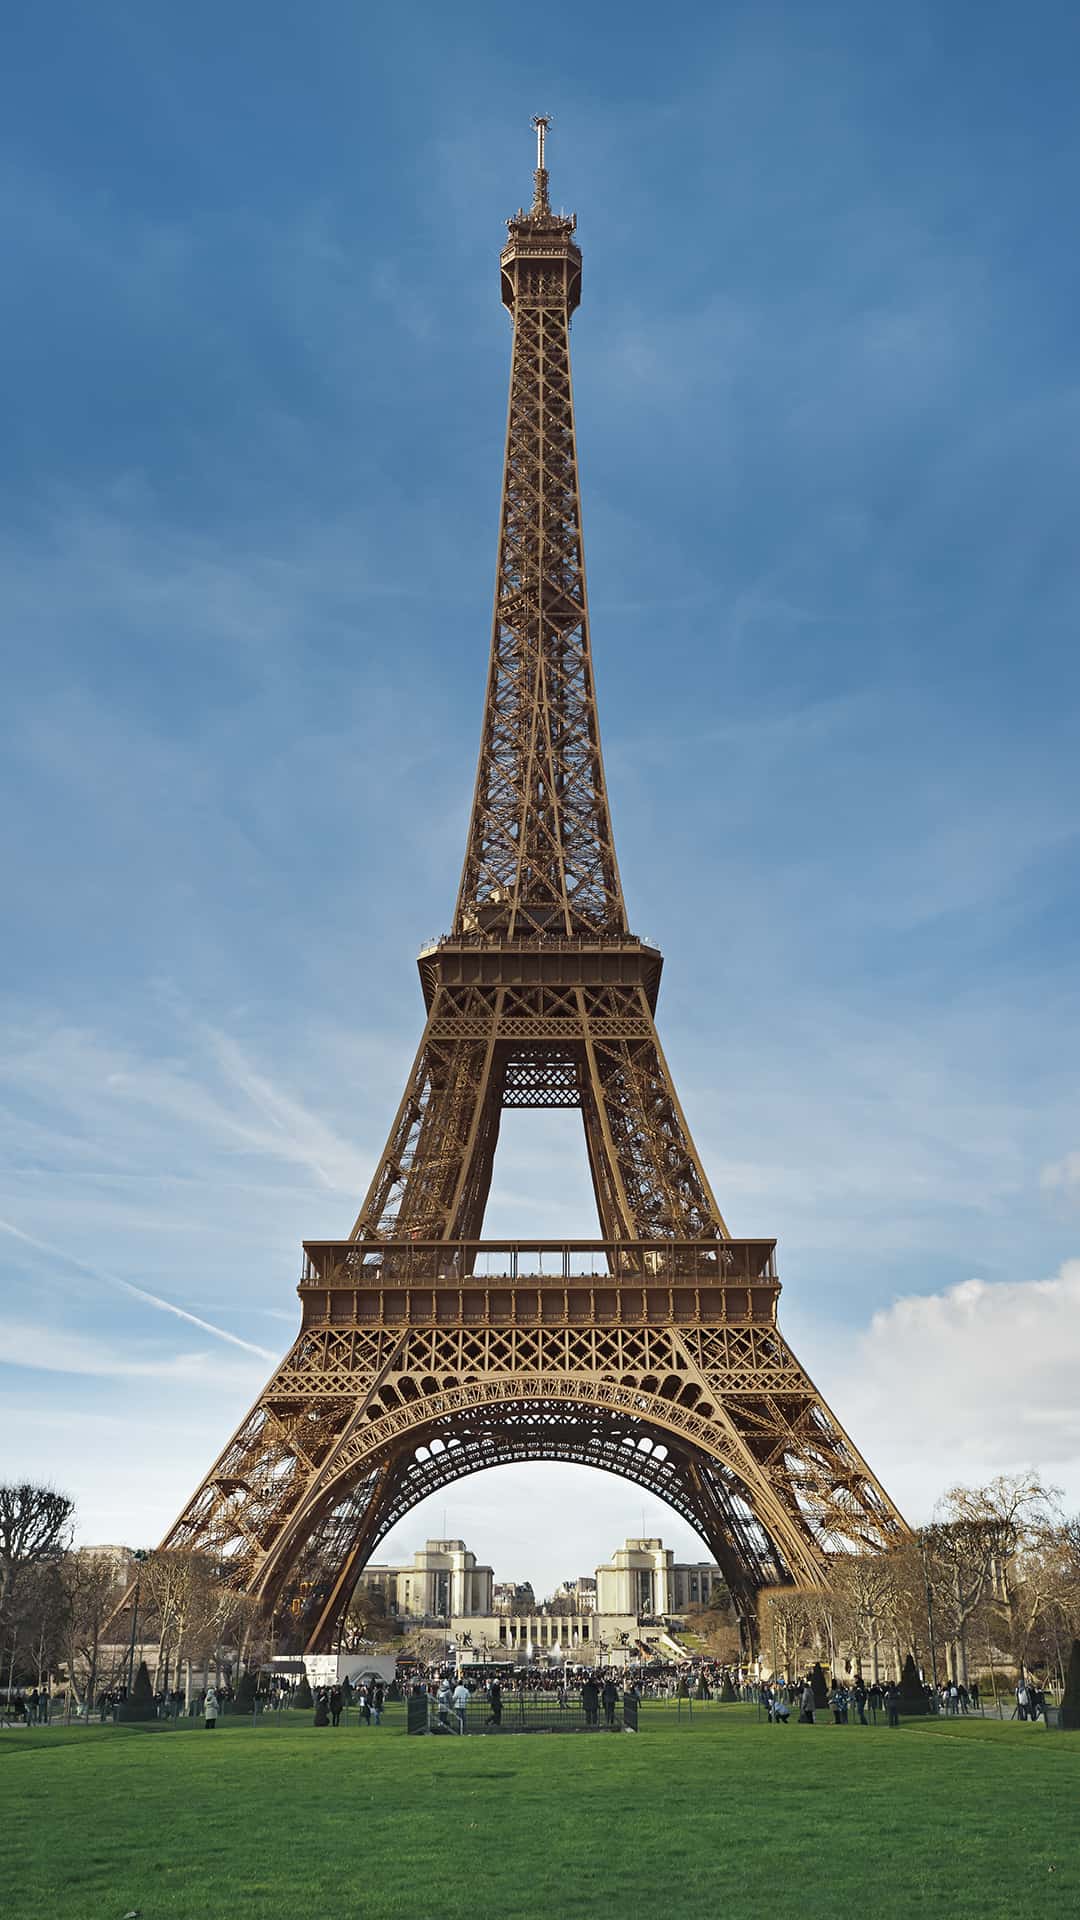 Eiffel Tower Paris France Blue Sky Android Wallpaper fondos de pantalla android